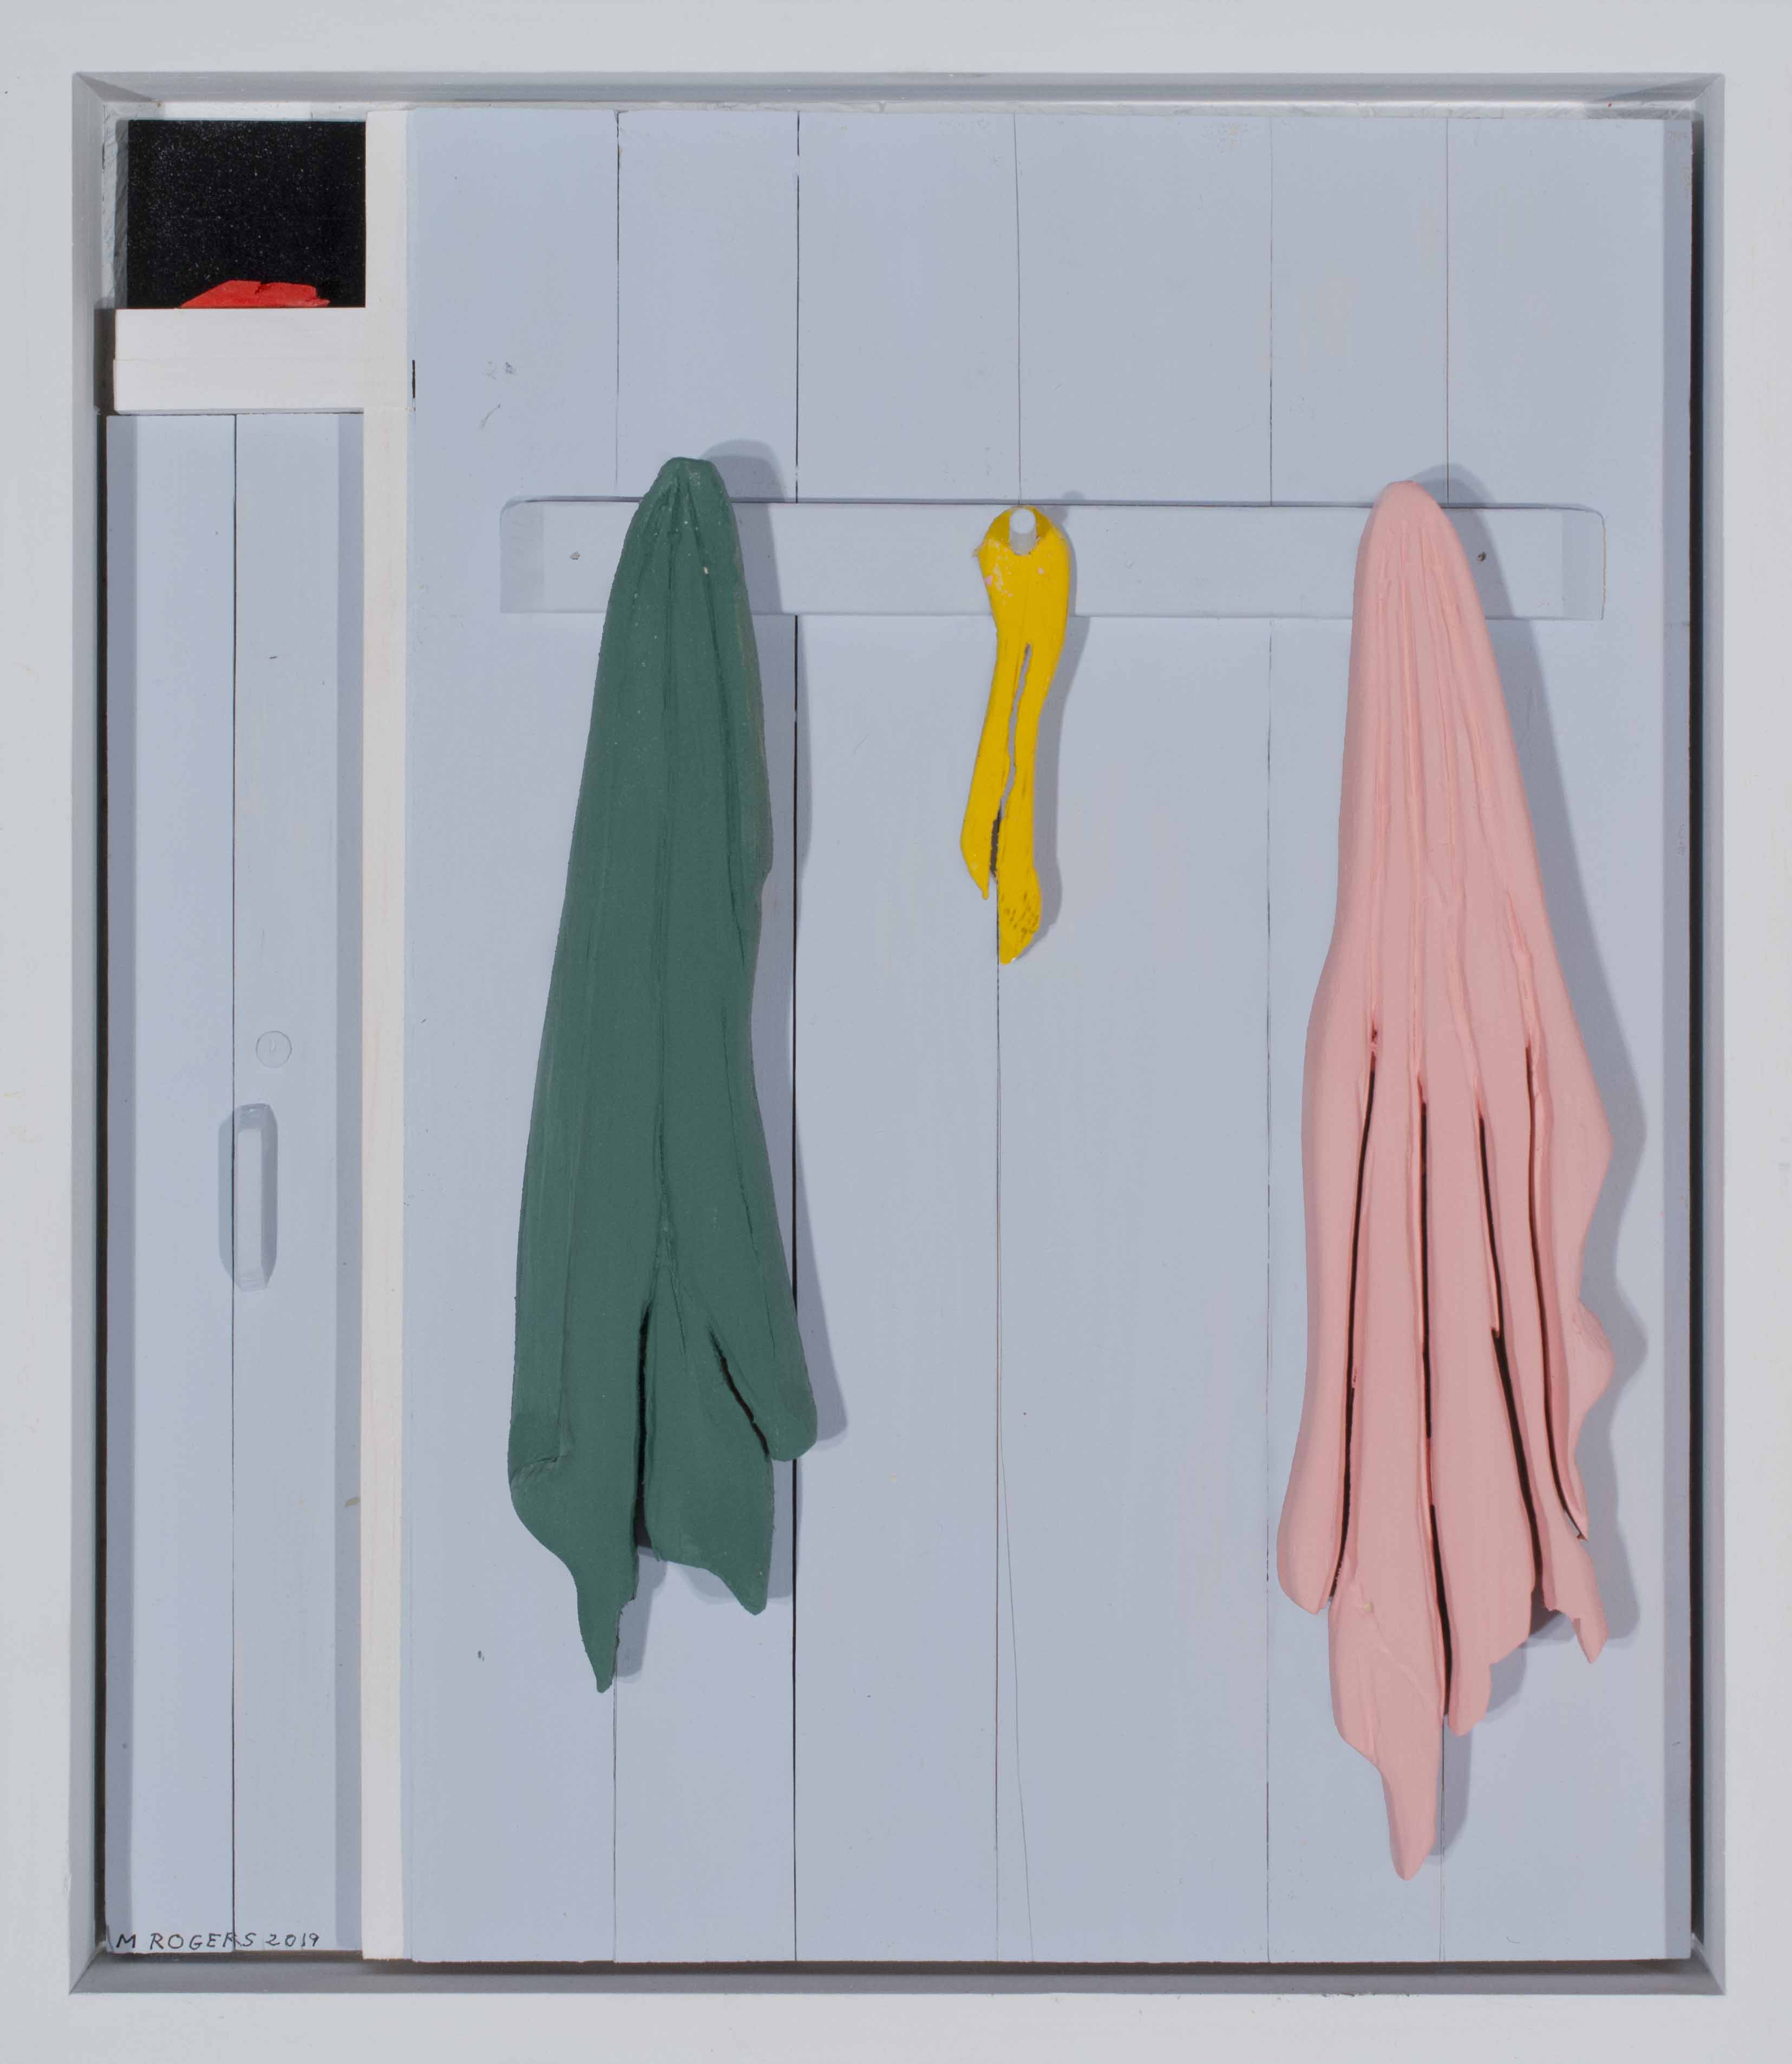 PNBA Locker, 2019, acrylic on wood, 15 x 13 inches